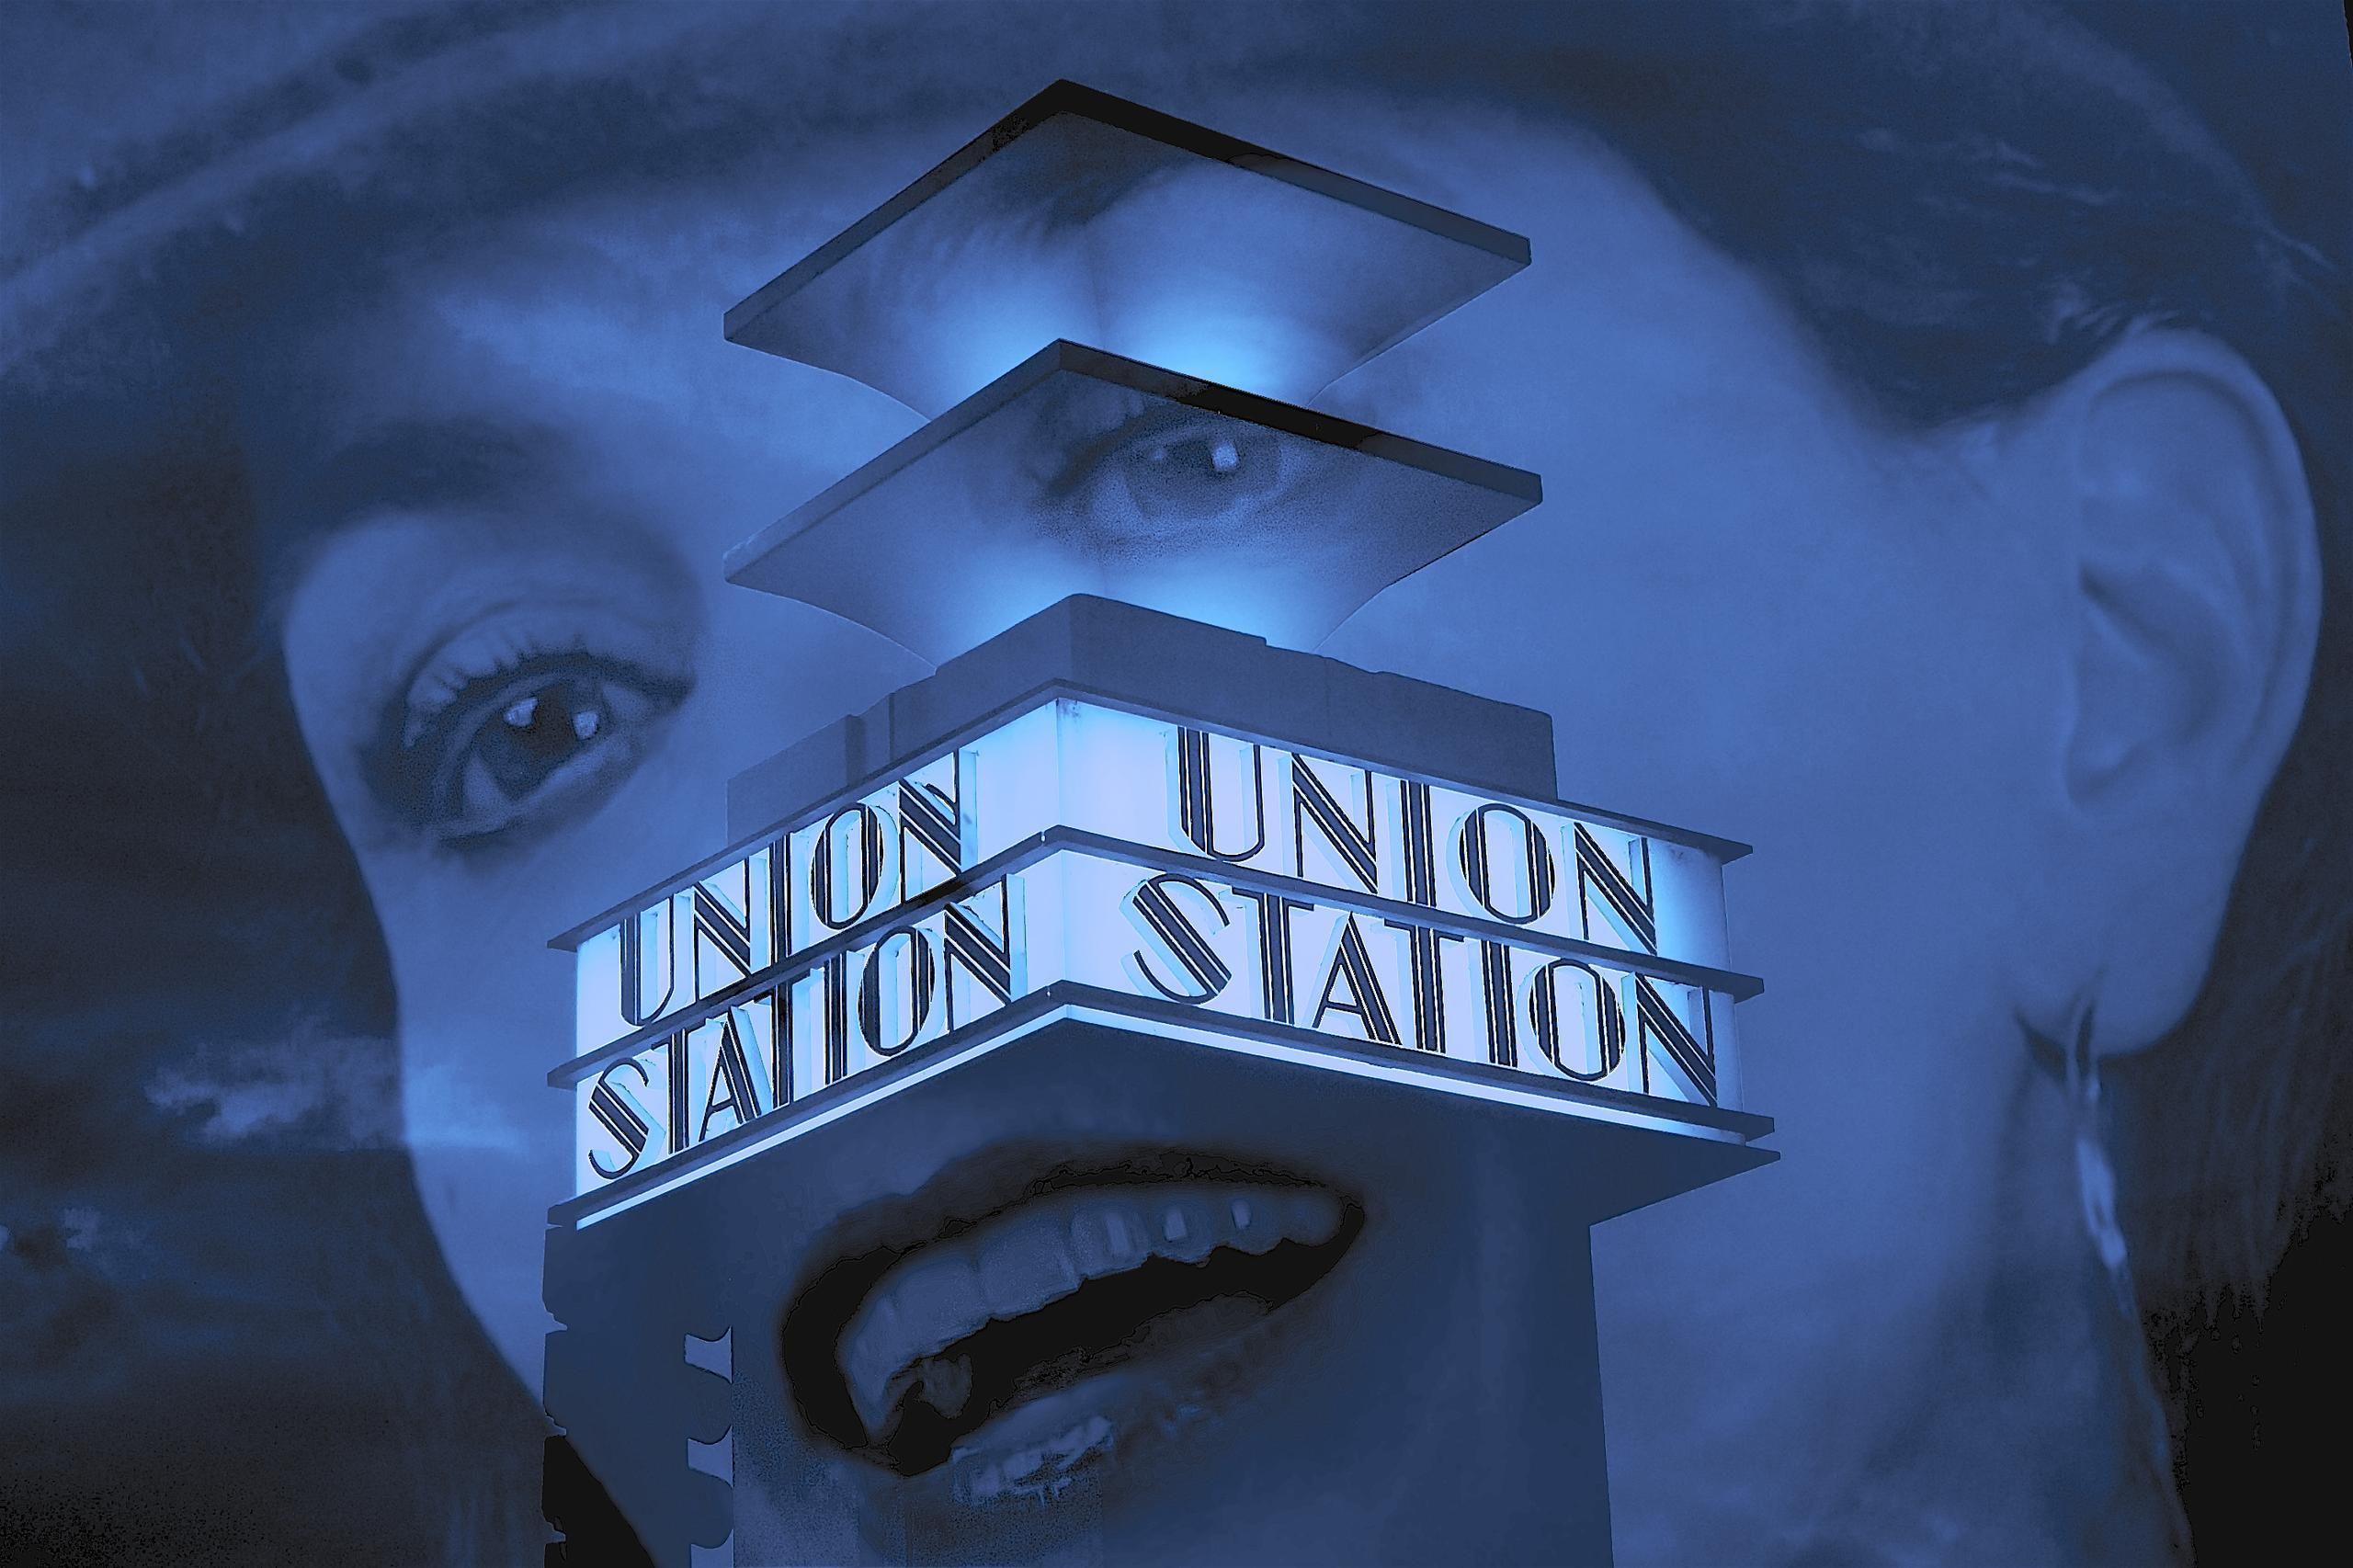 Union Station Splendor - Photograph by Allan Peach